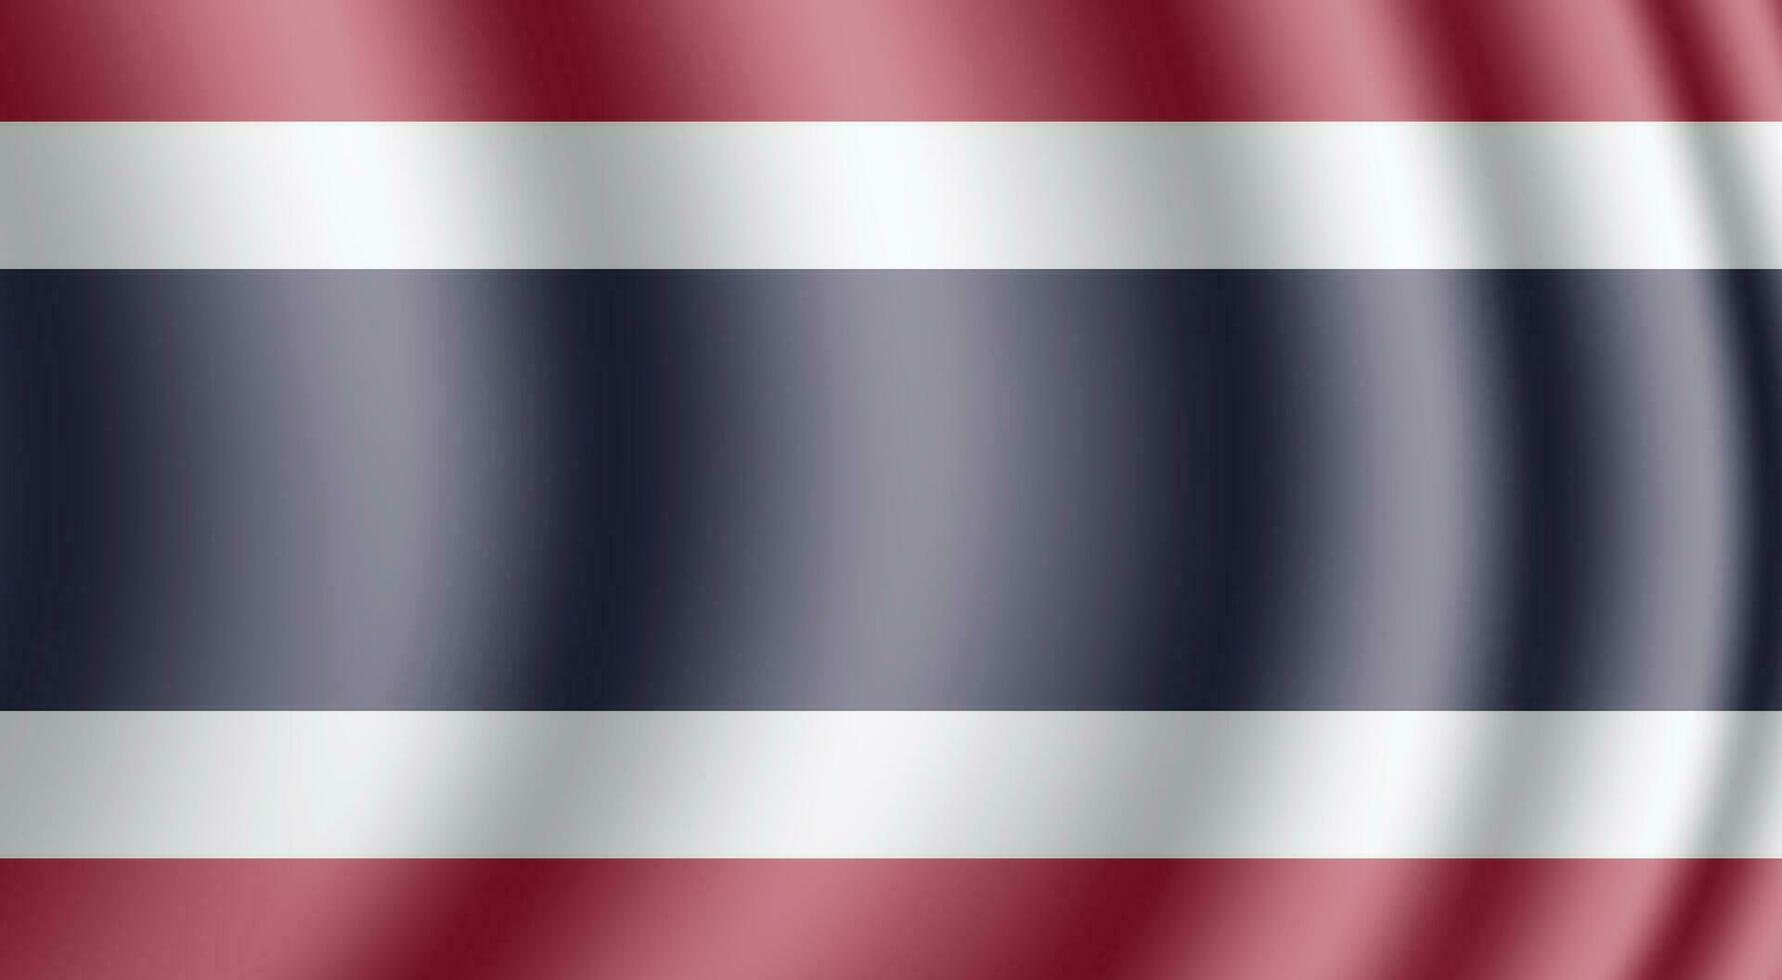 Thailand wavy flag nation vector background design